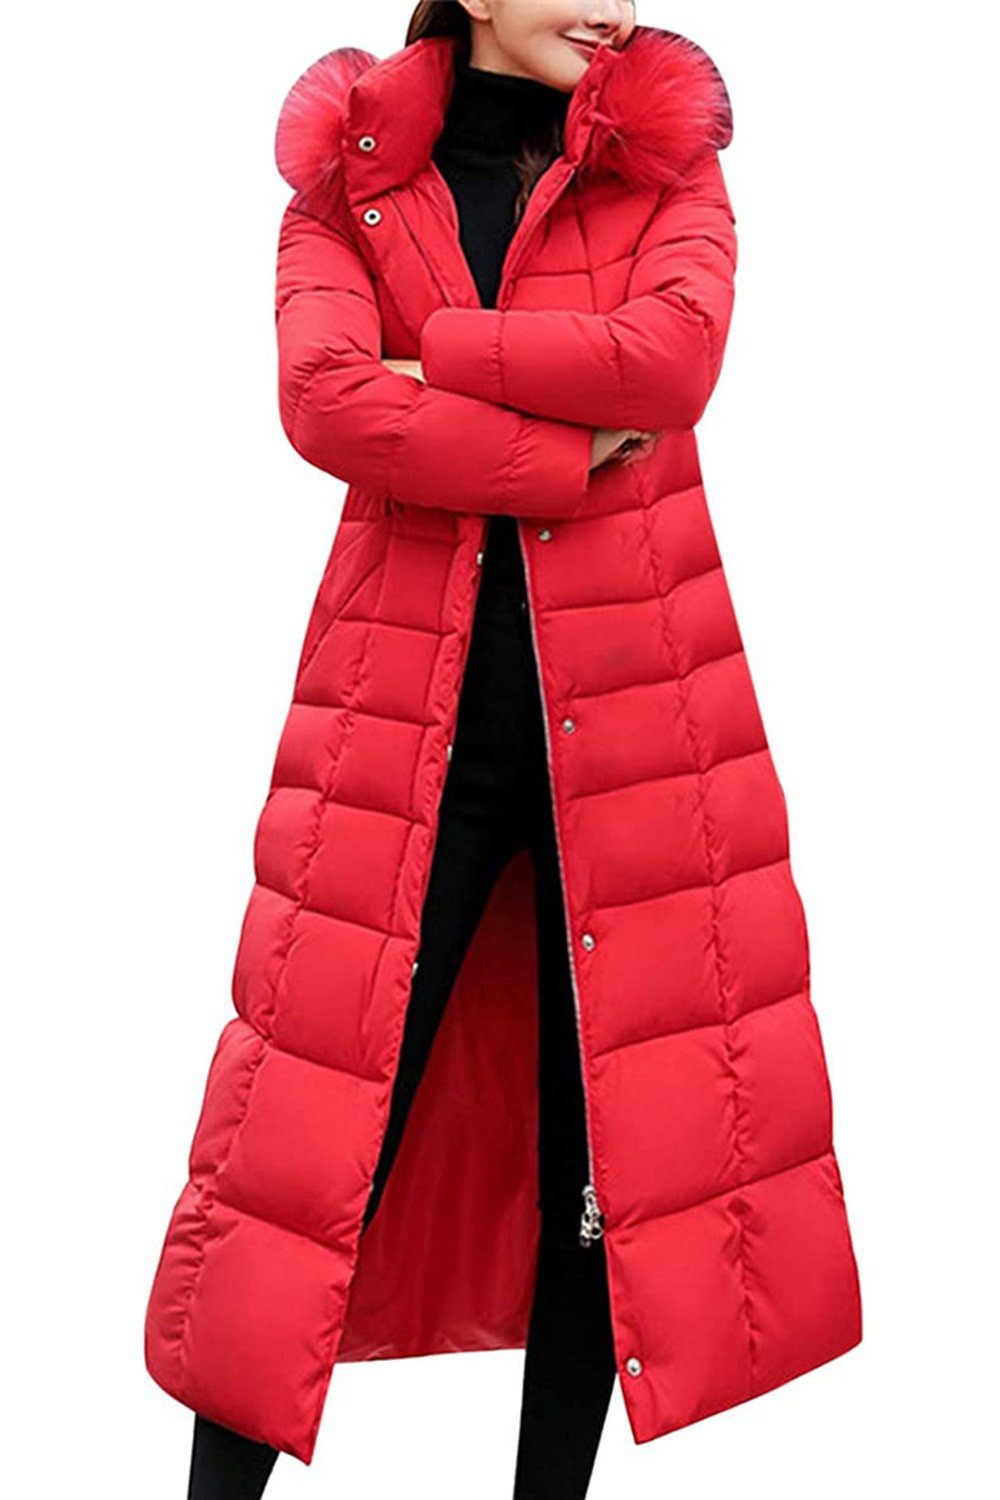 Steppjacke Rot B.X Damen Oberbekleidung, Wintermantel Parka-Jacke lange Steppmantel, Pelzkragen mit